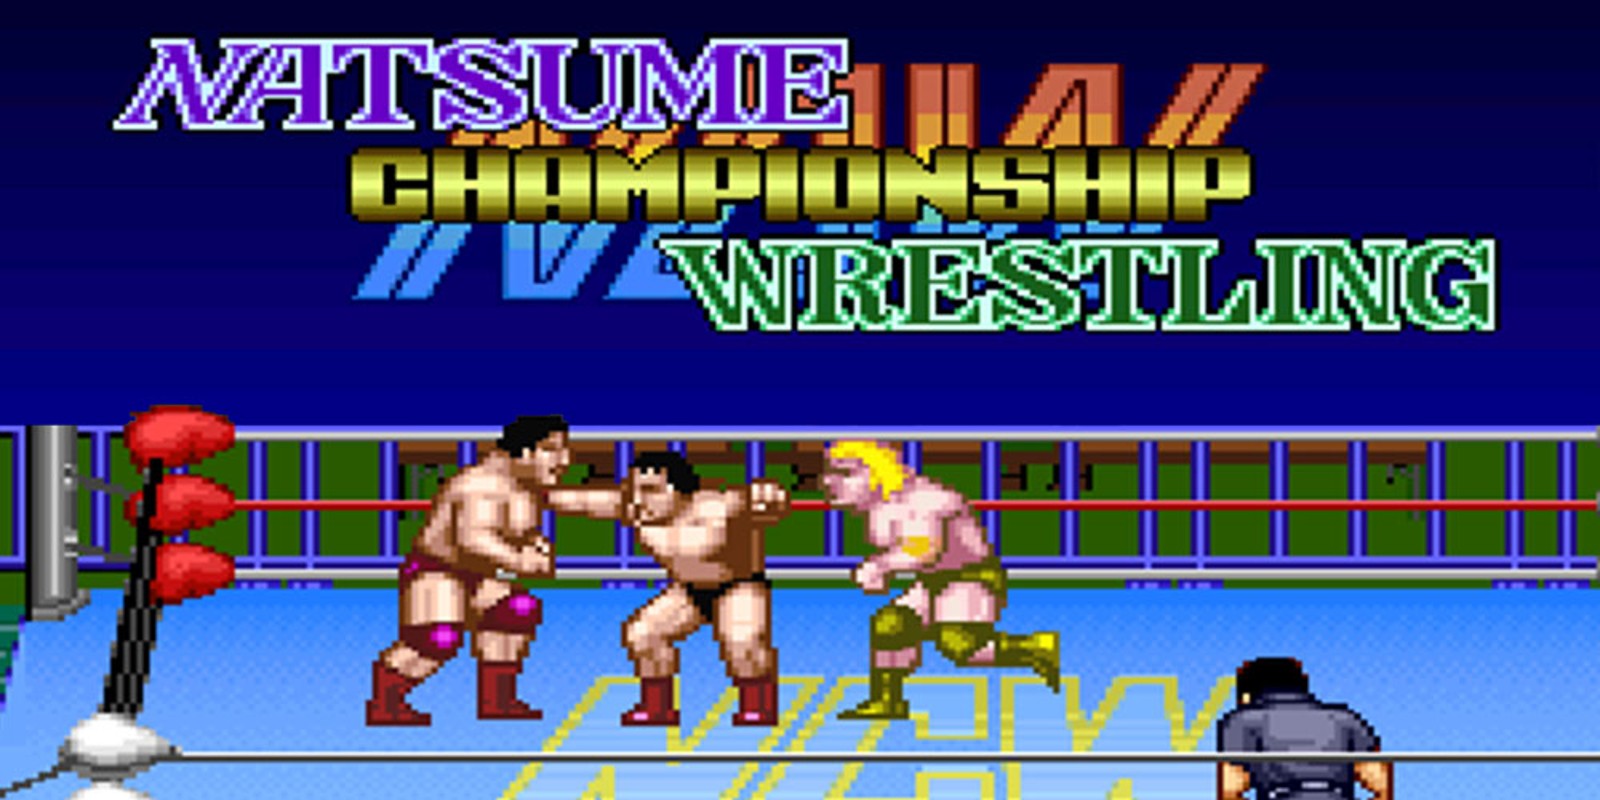 Natsume Championship Wrestling™